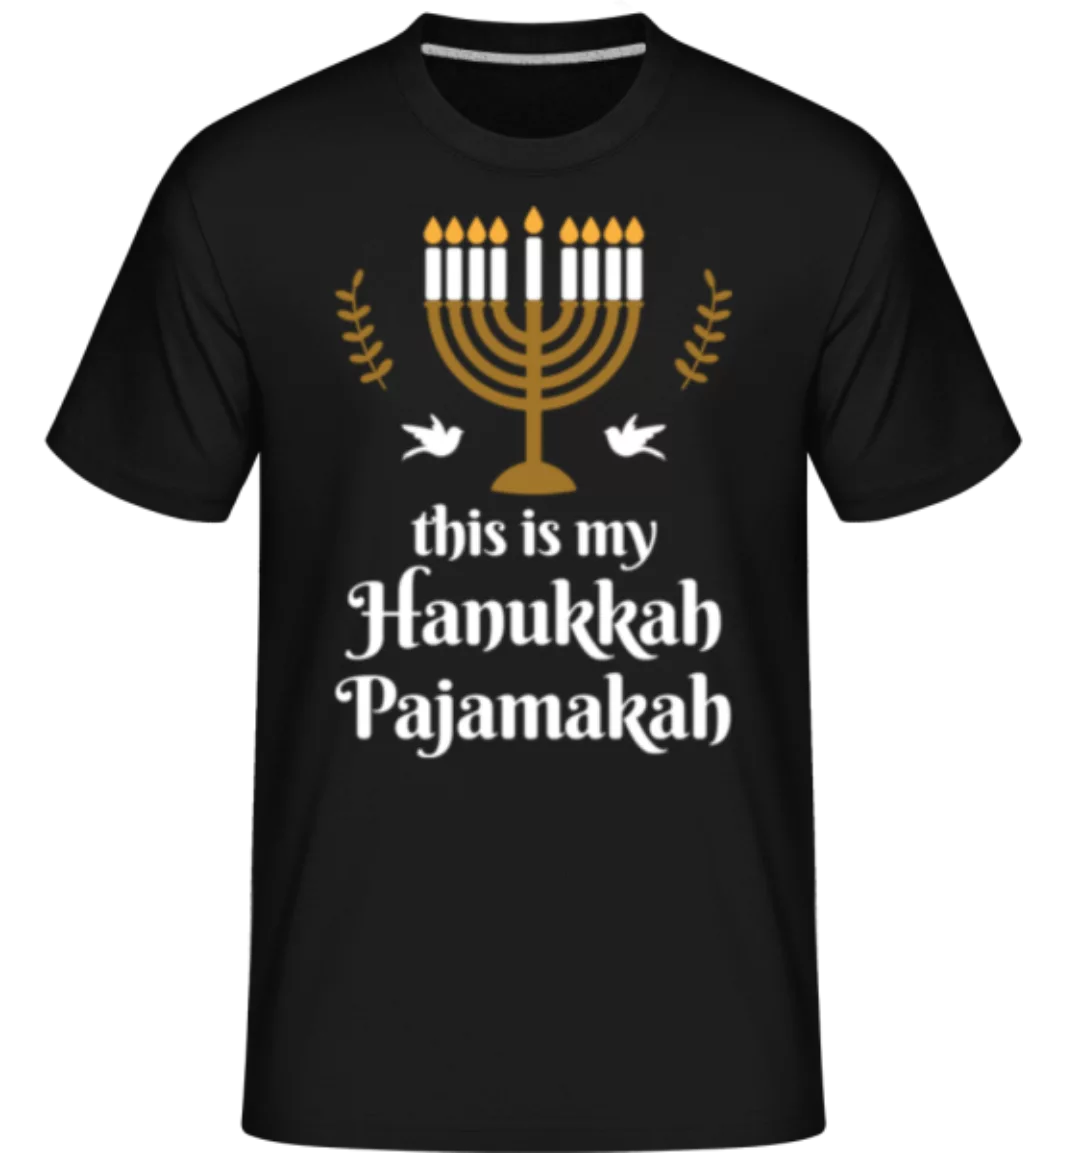 This Is My Hanukkah Pajamakah · Shirtinator Männer T-Shirt günstig online kaufen